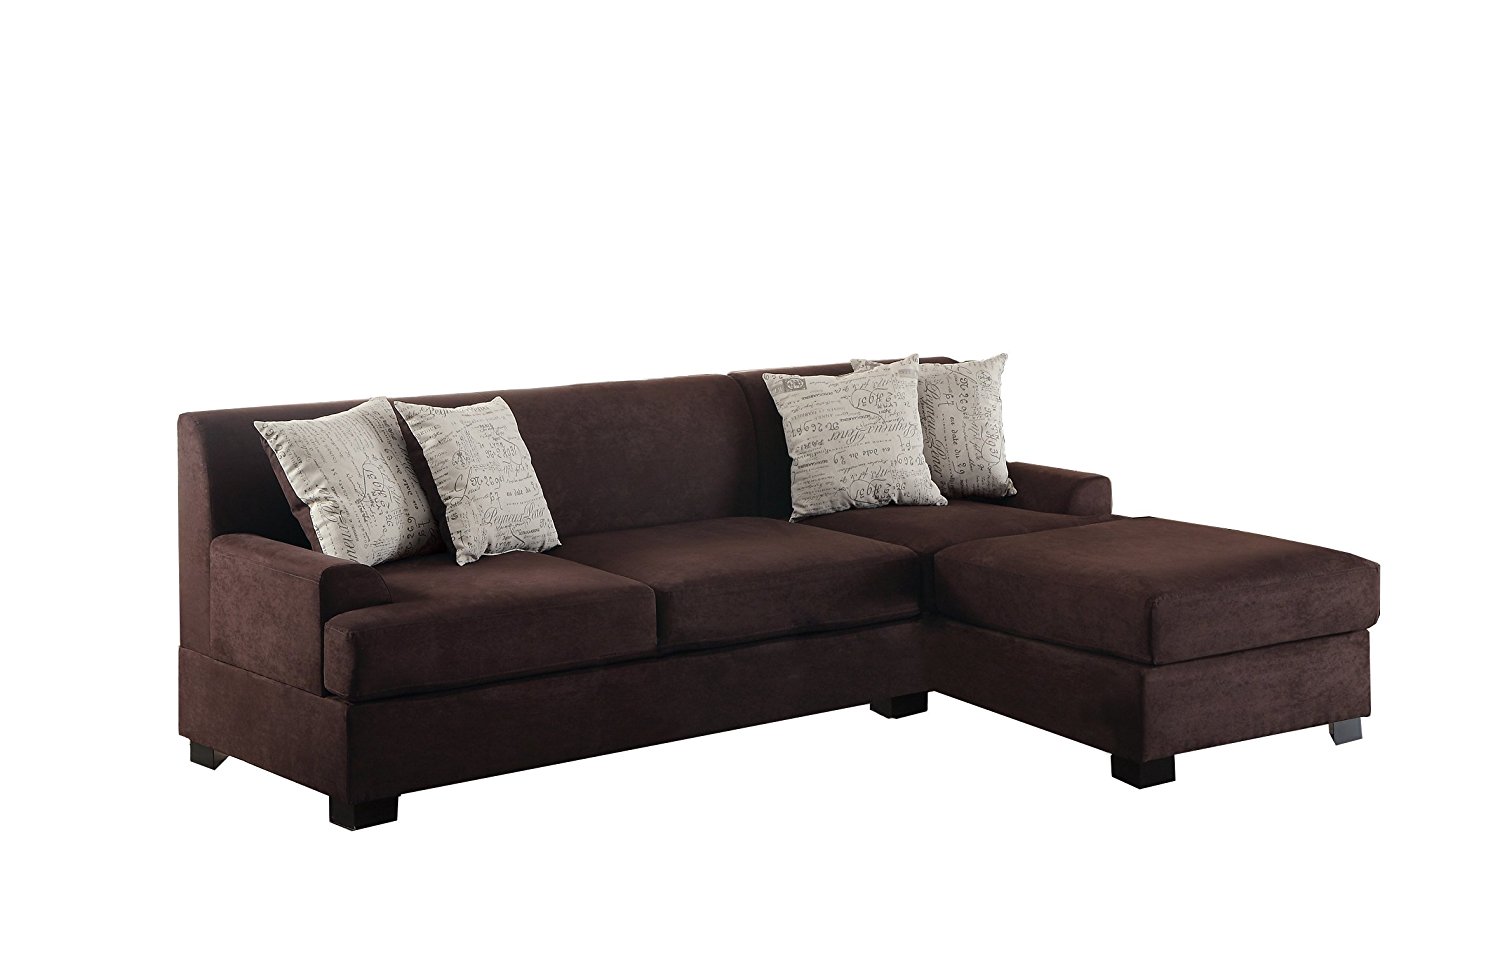 Poundex Bobkona Samuel Microsuede 3-Seat Reversible Sectional Sofa, Chocolate